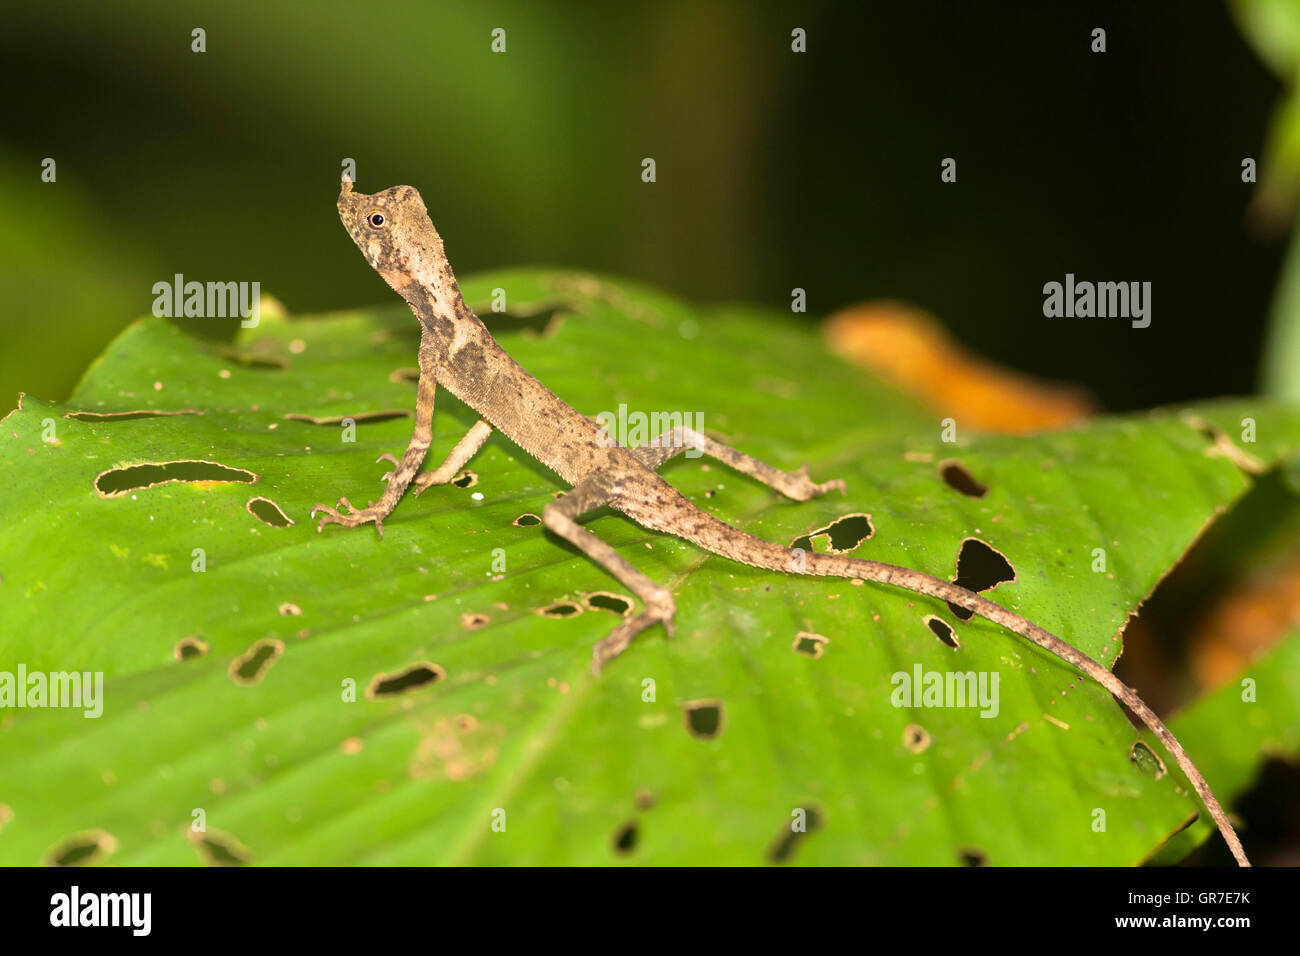 Ornate Shrub Lizard (Aphaniotis ornata) resting on leaf, Kinabatangan, Sabah, Borneo, Malaysia Stock Photo